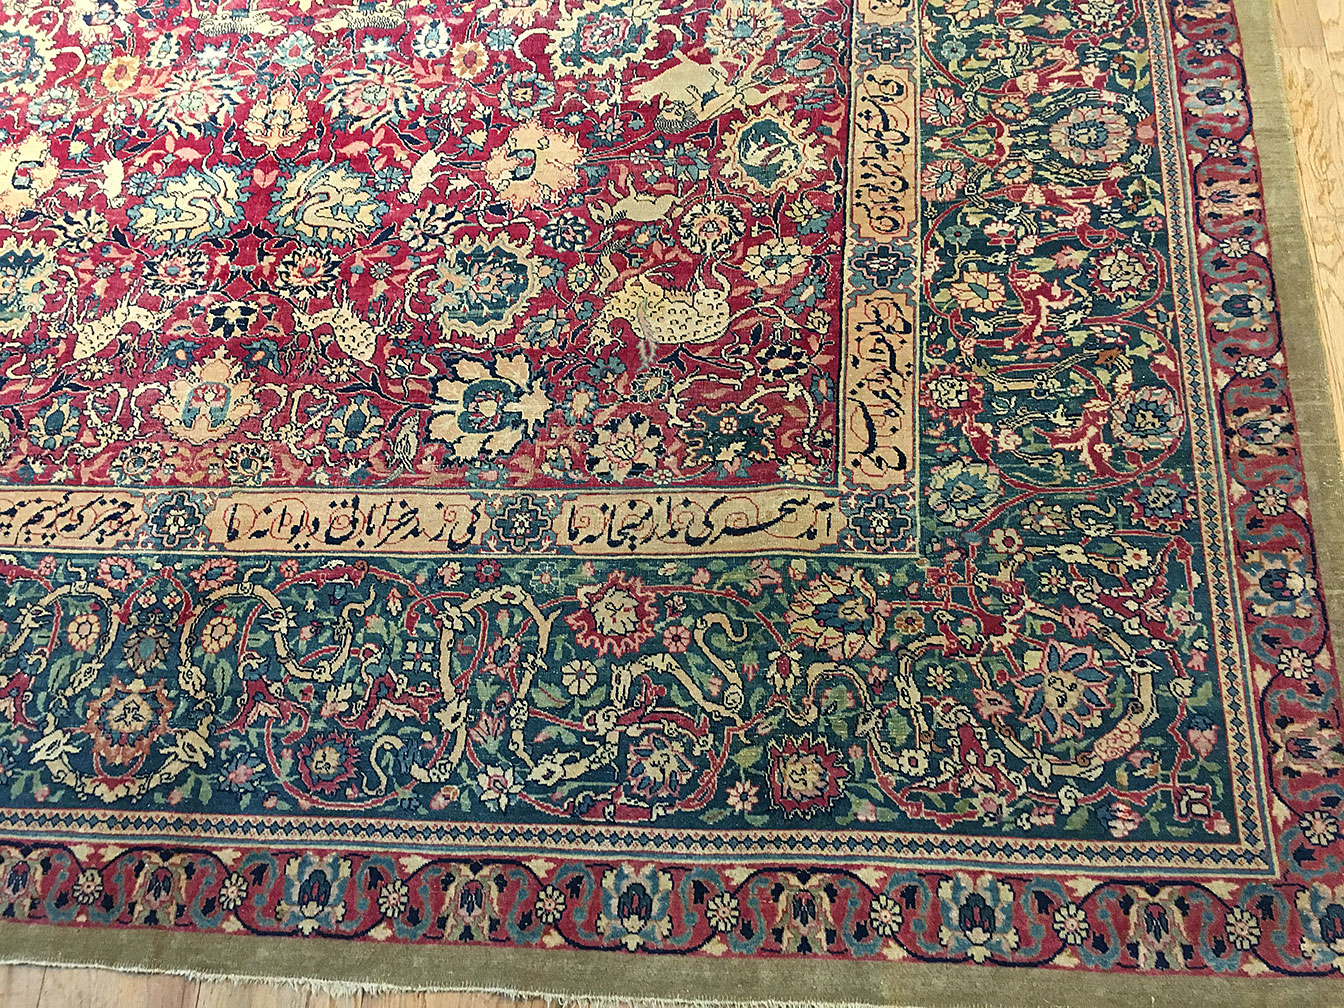 Antique tabriz Carpet - # 53072